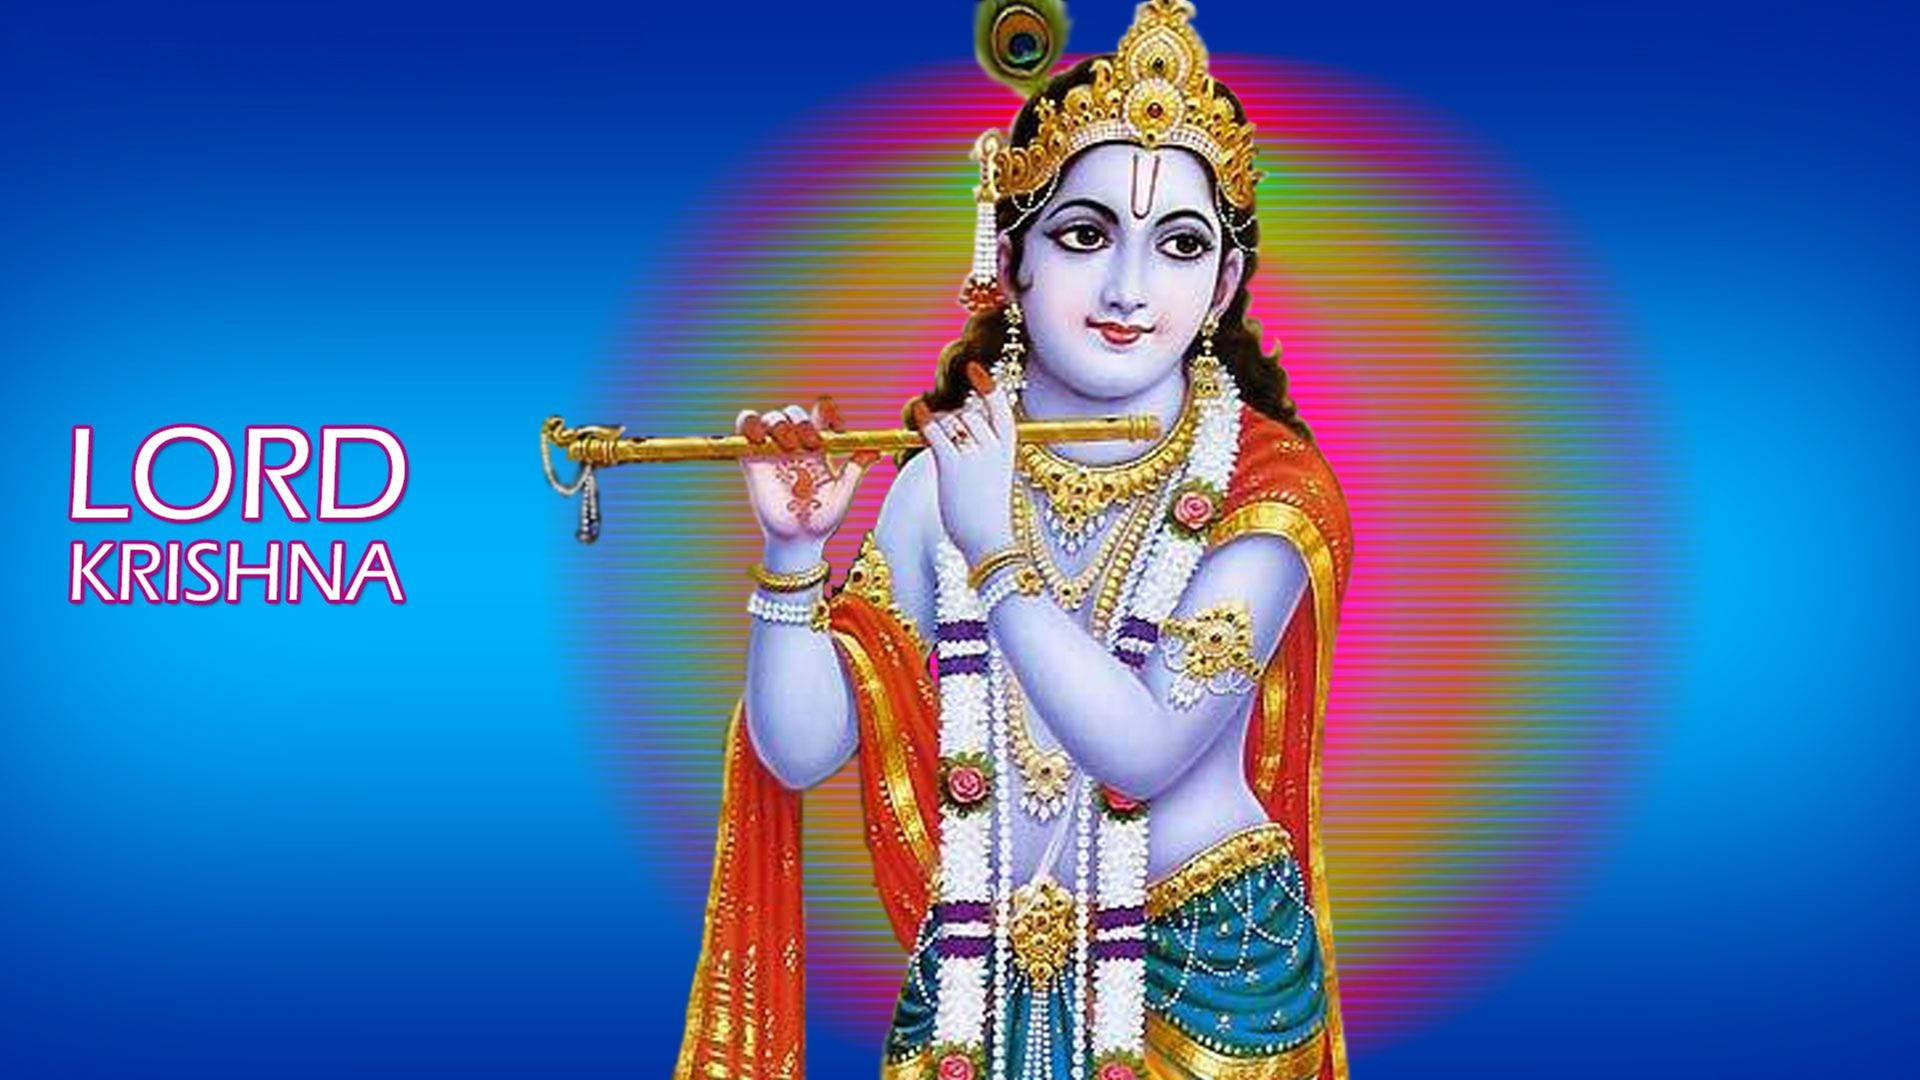 Lord Krishna 4k Psychedelic Digital Art